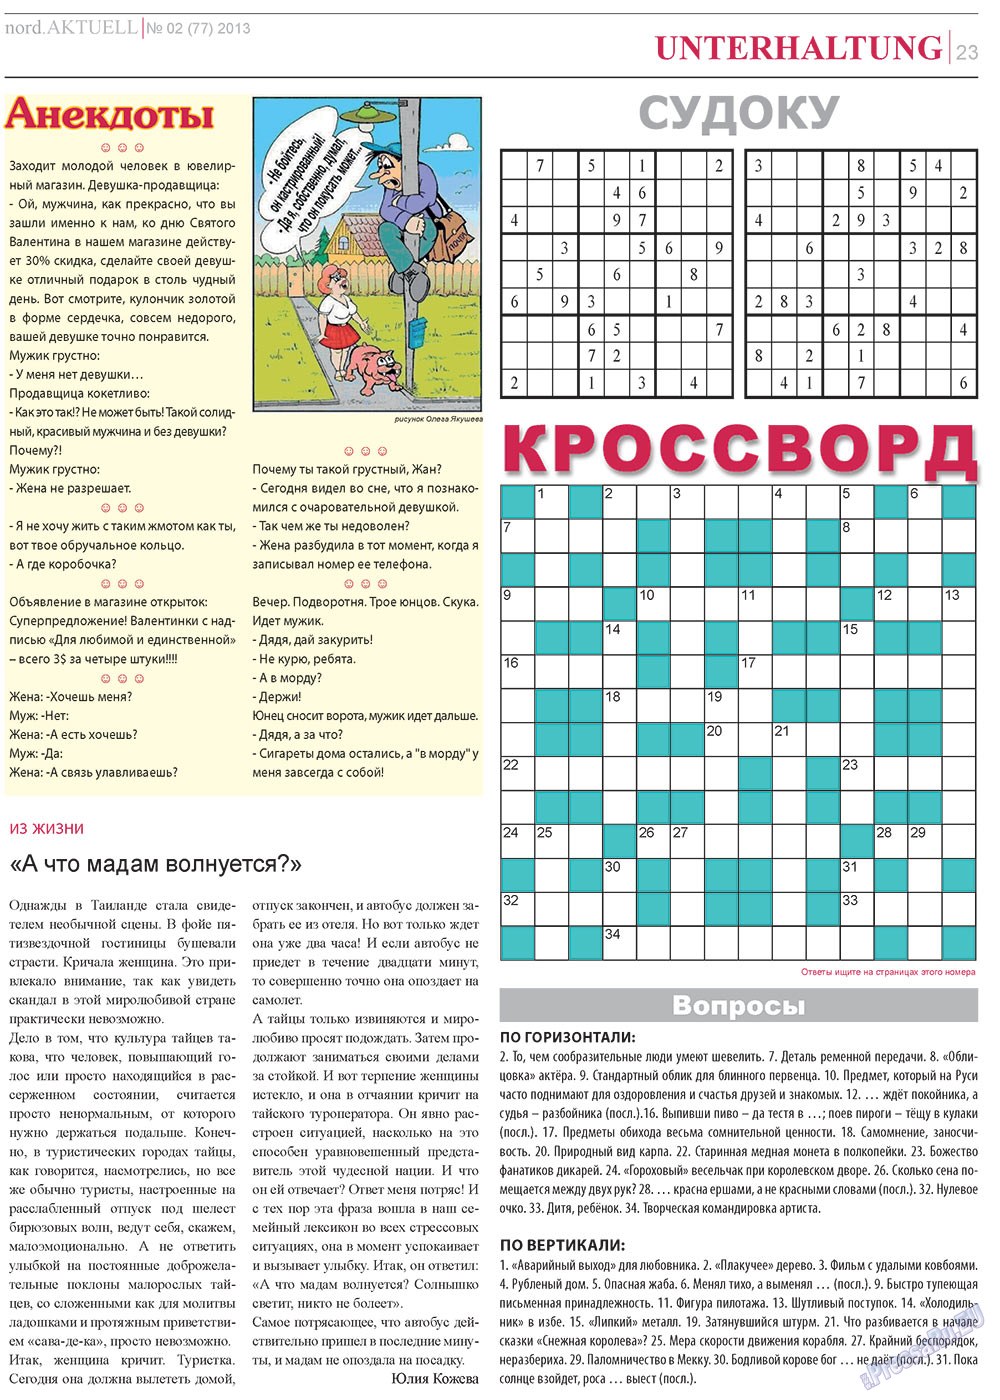 nord.Aktuell, газета. 2013 №2 стр.23